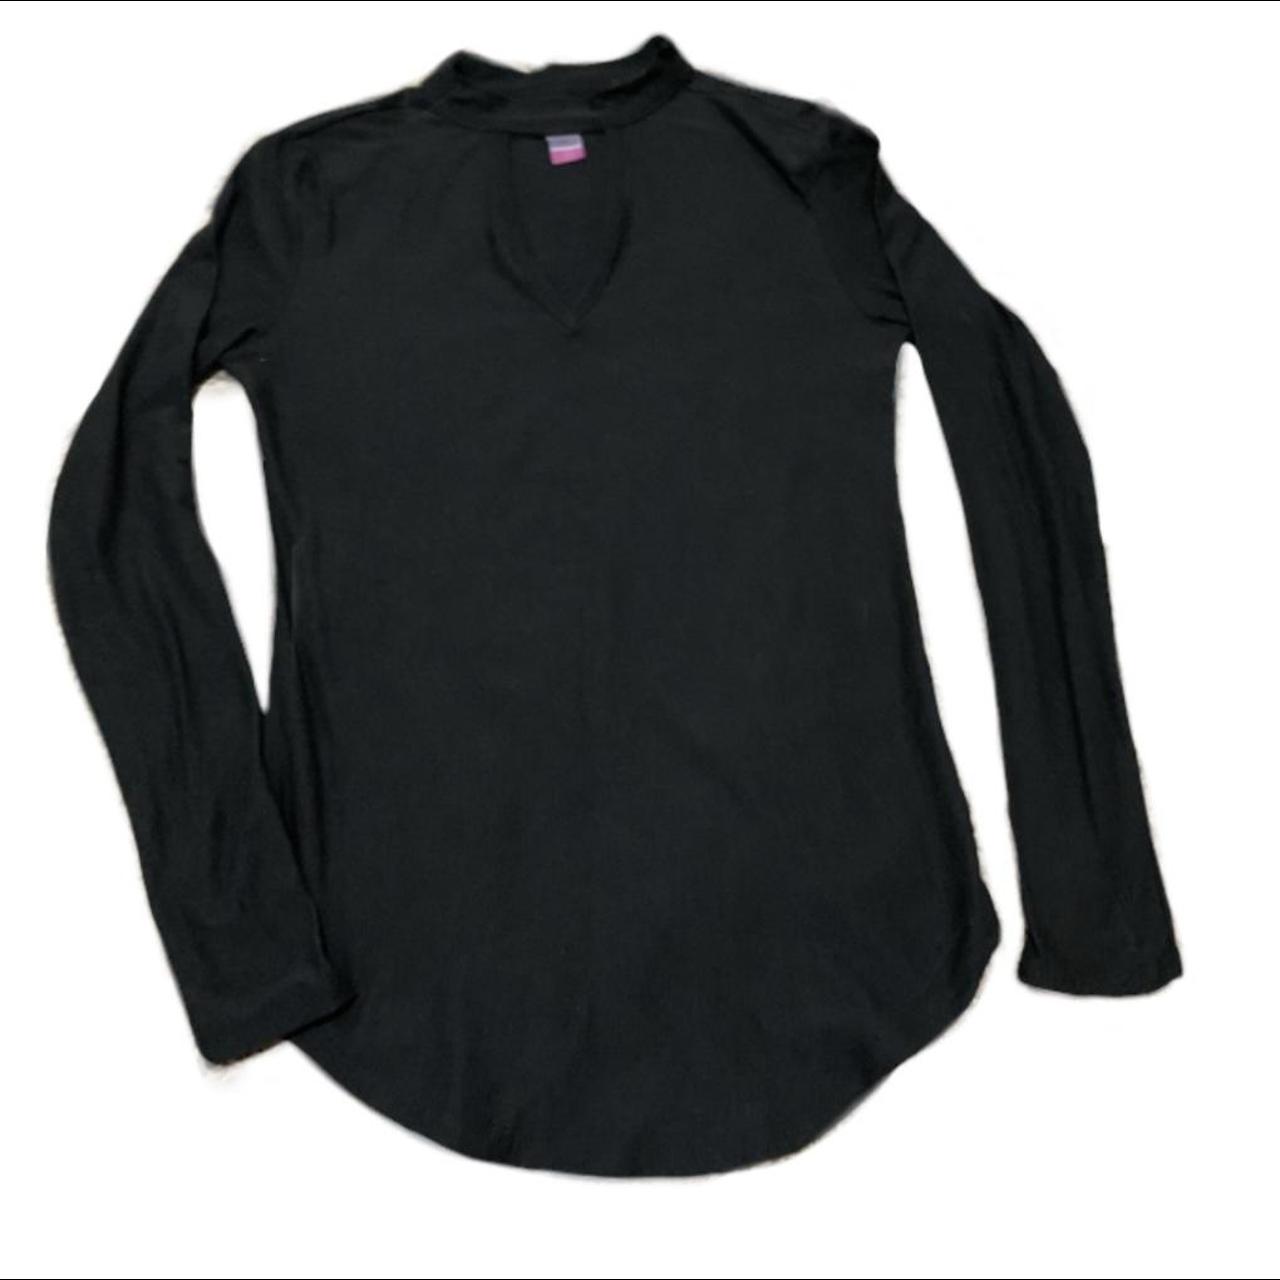 Zumiez Women's Black Shirt